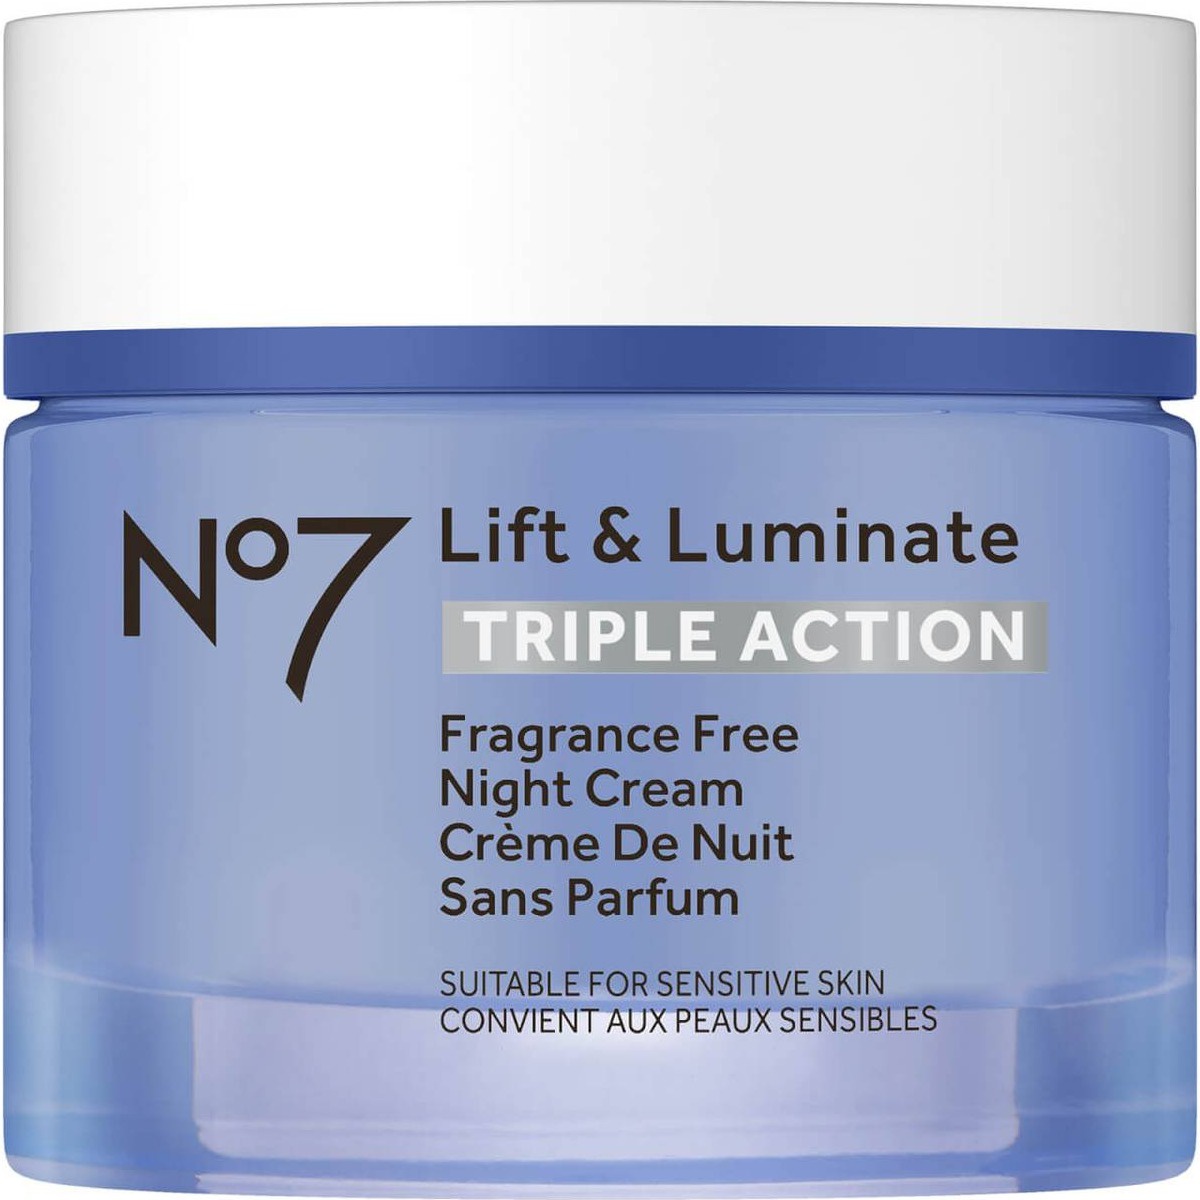 No7 Laboratories Lift & Luminate Triple Action Fragrance Free Night Cream